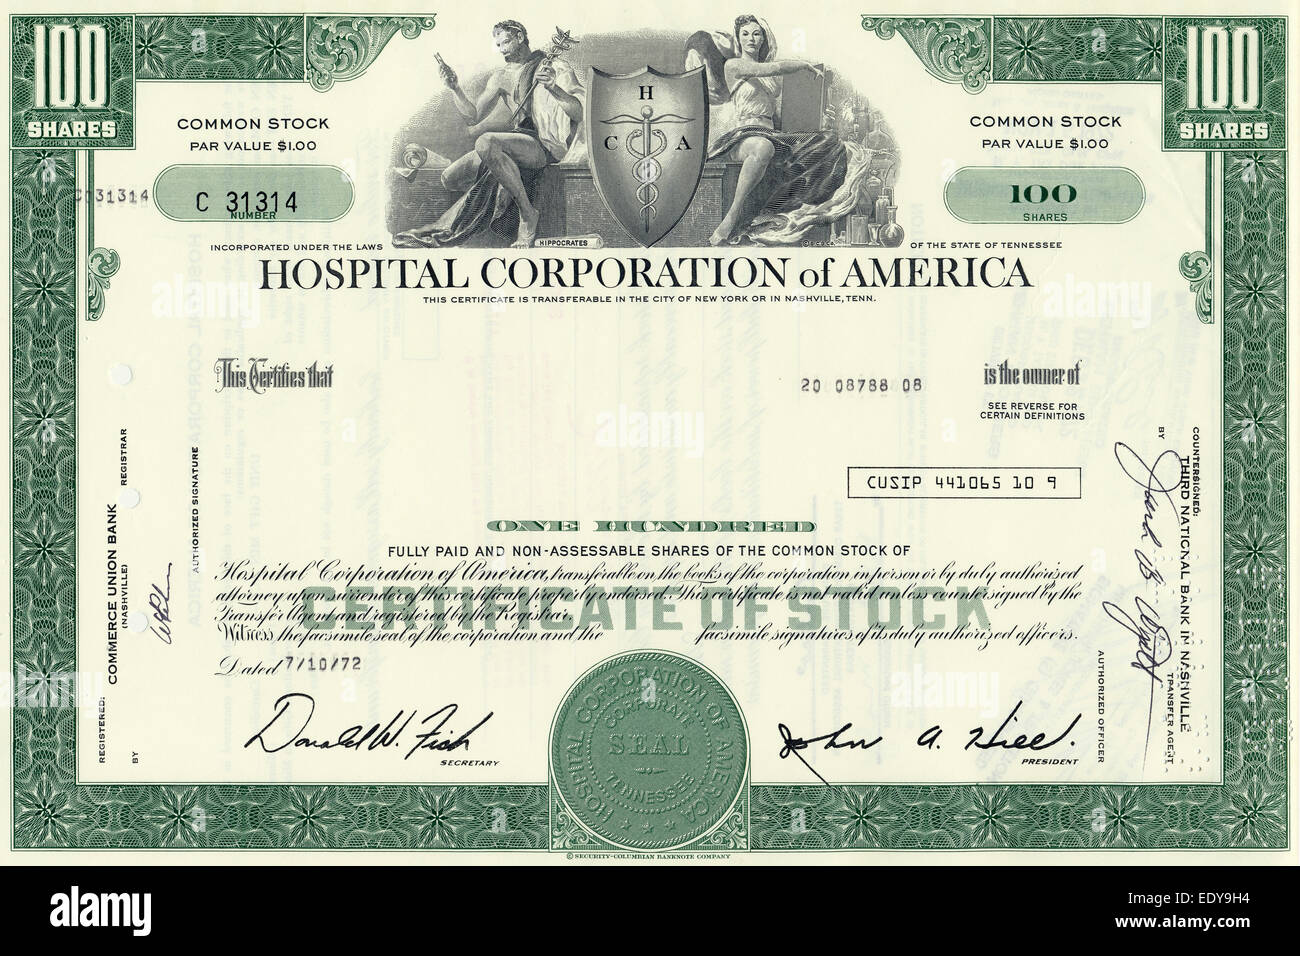 Historischen Aktienzertifikat, Hospital Corporation of America, New York oder Nashville, Tennessee, USA, 1972 Stockfoto